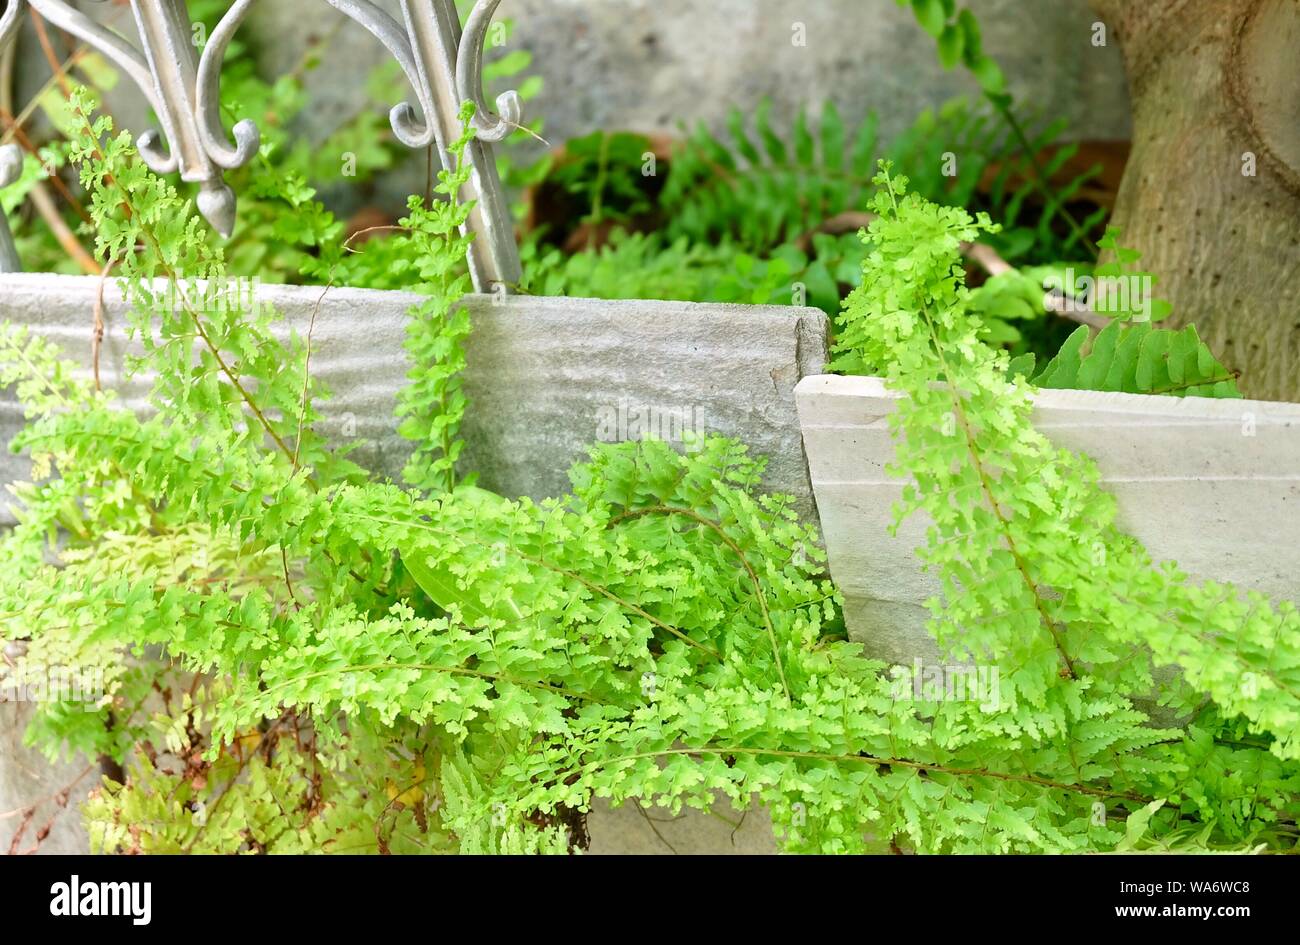 Green Bush of Tassle Ferns Grow on Flower Pot for Garden Decoration. Stock Photo